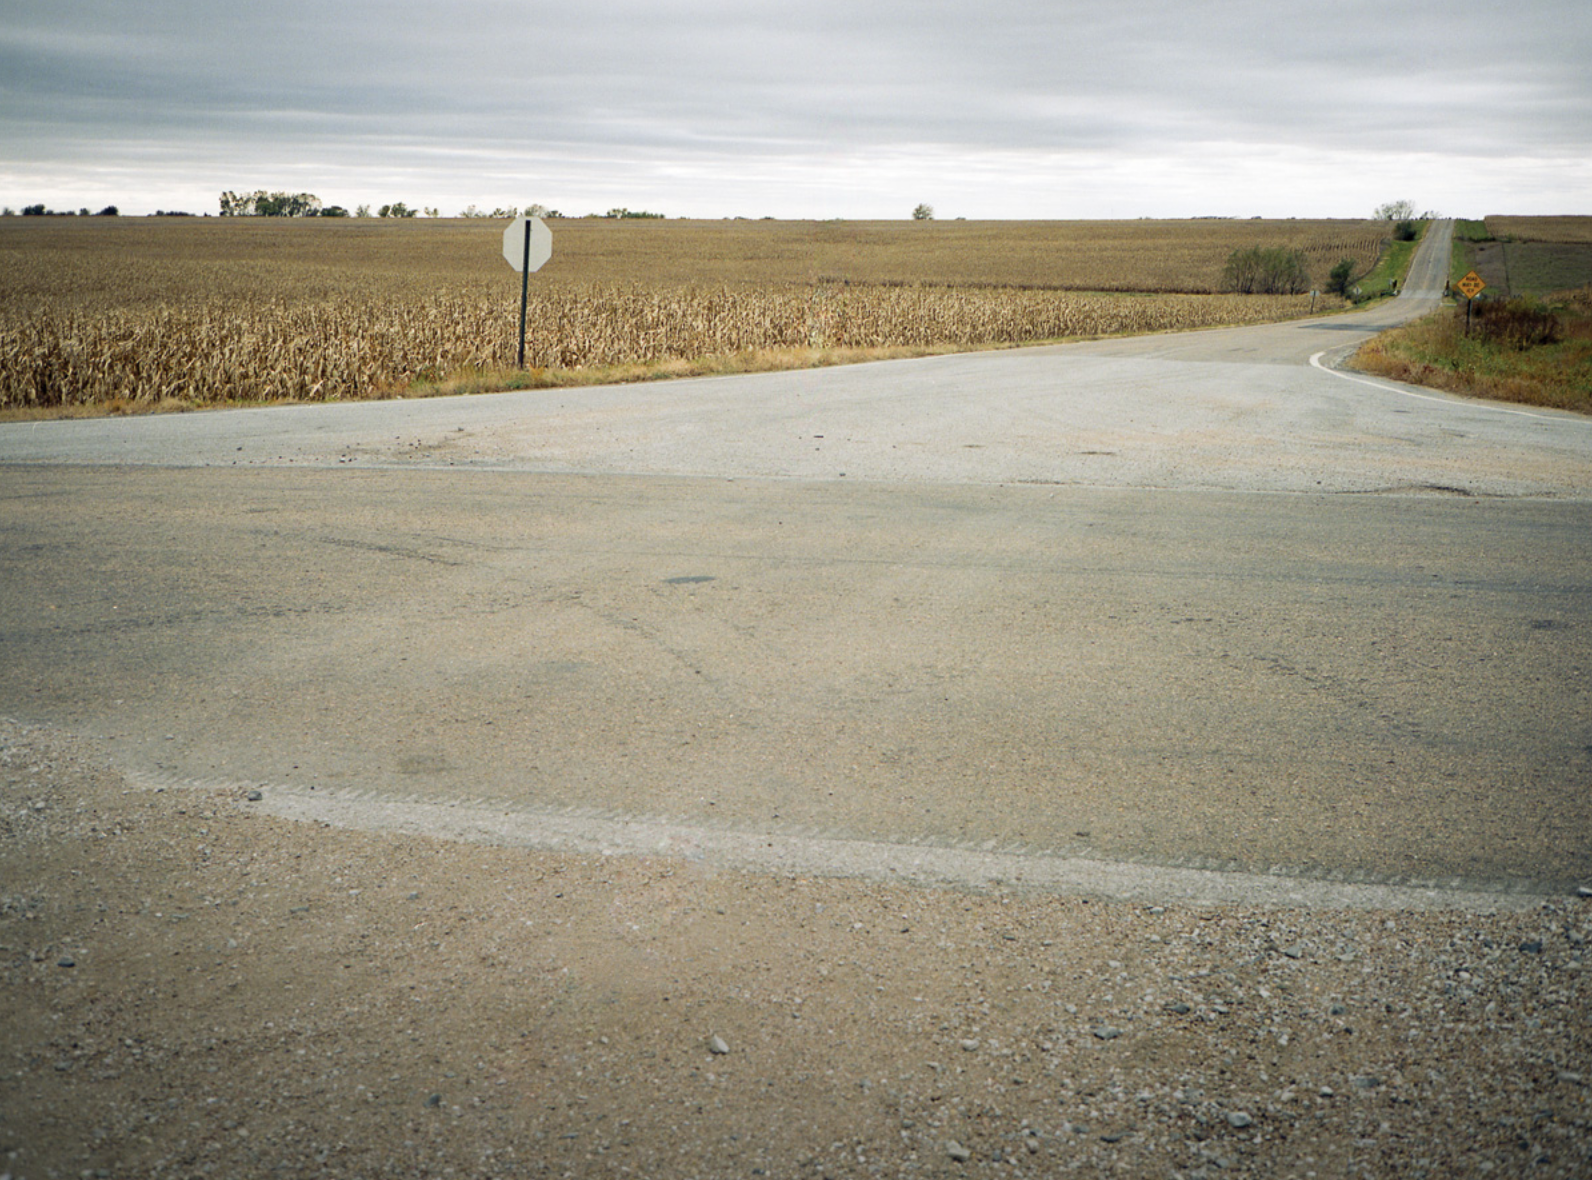 Cornfields, Adams, Nebraska. Image by Kalen Goodluck. United States, undated. 